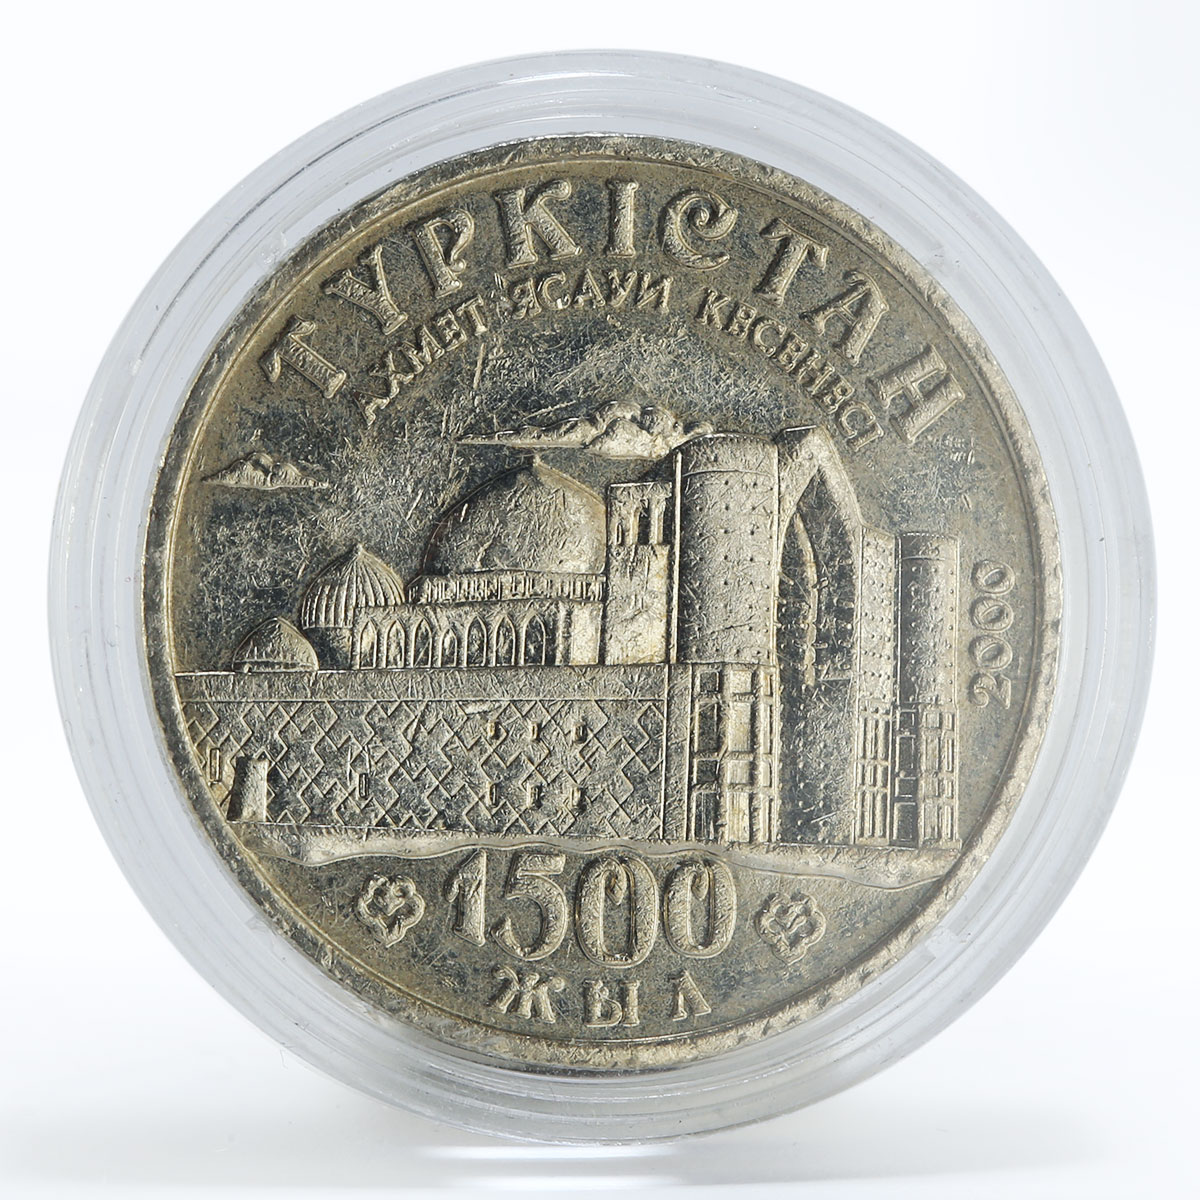 Kazakhstan 50 tenge Mausoleum of Akhmet Yasawi copper-nickel coin 2000